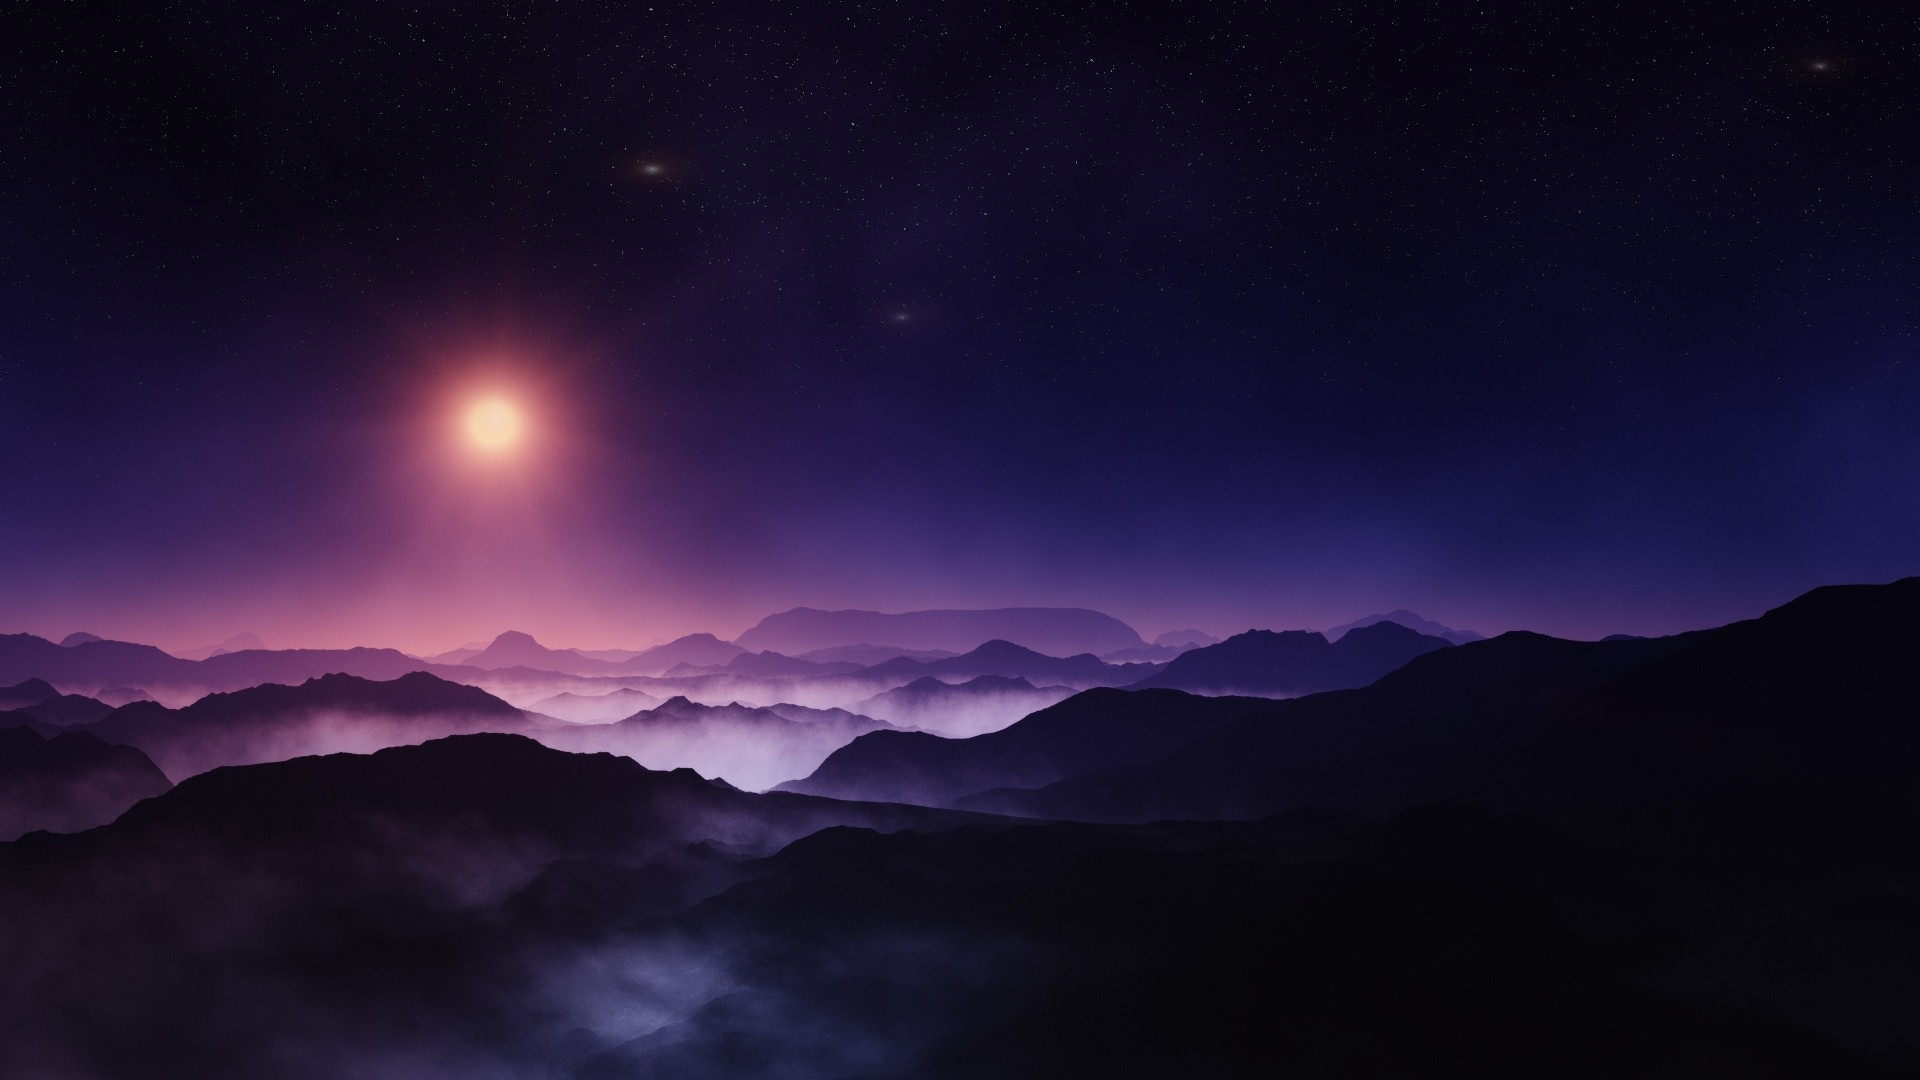 General 1920x1080 nature landscape midnight Sun mountains starry night mist violet